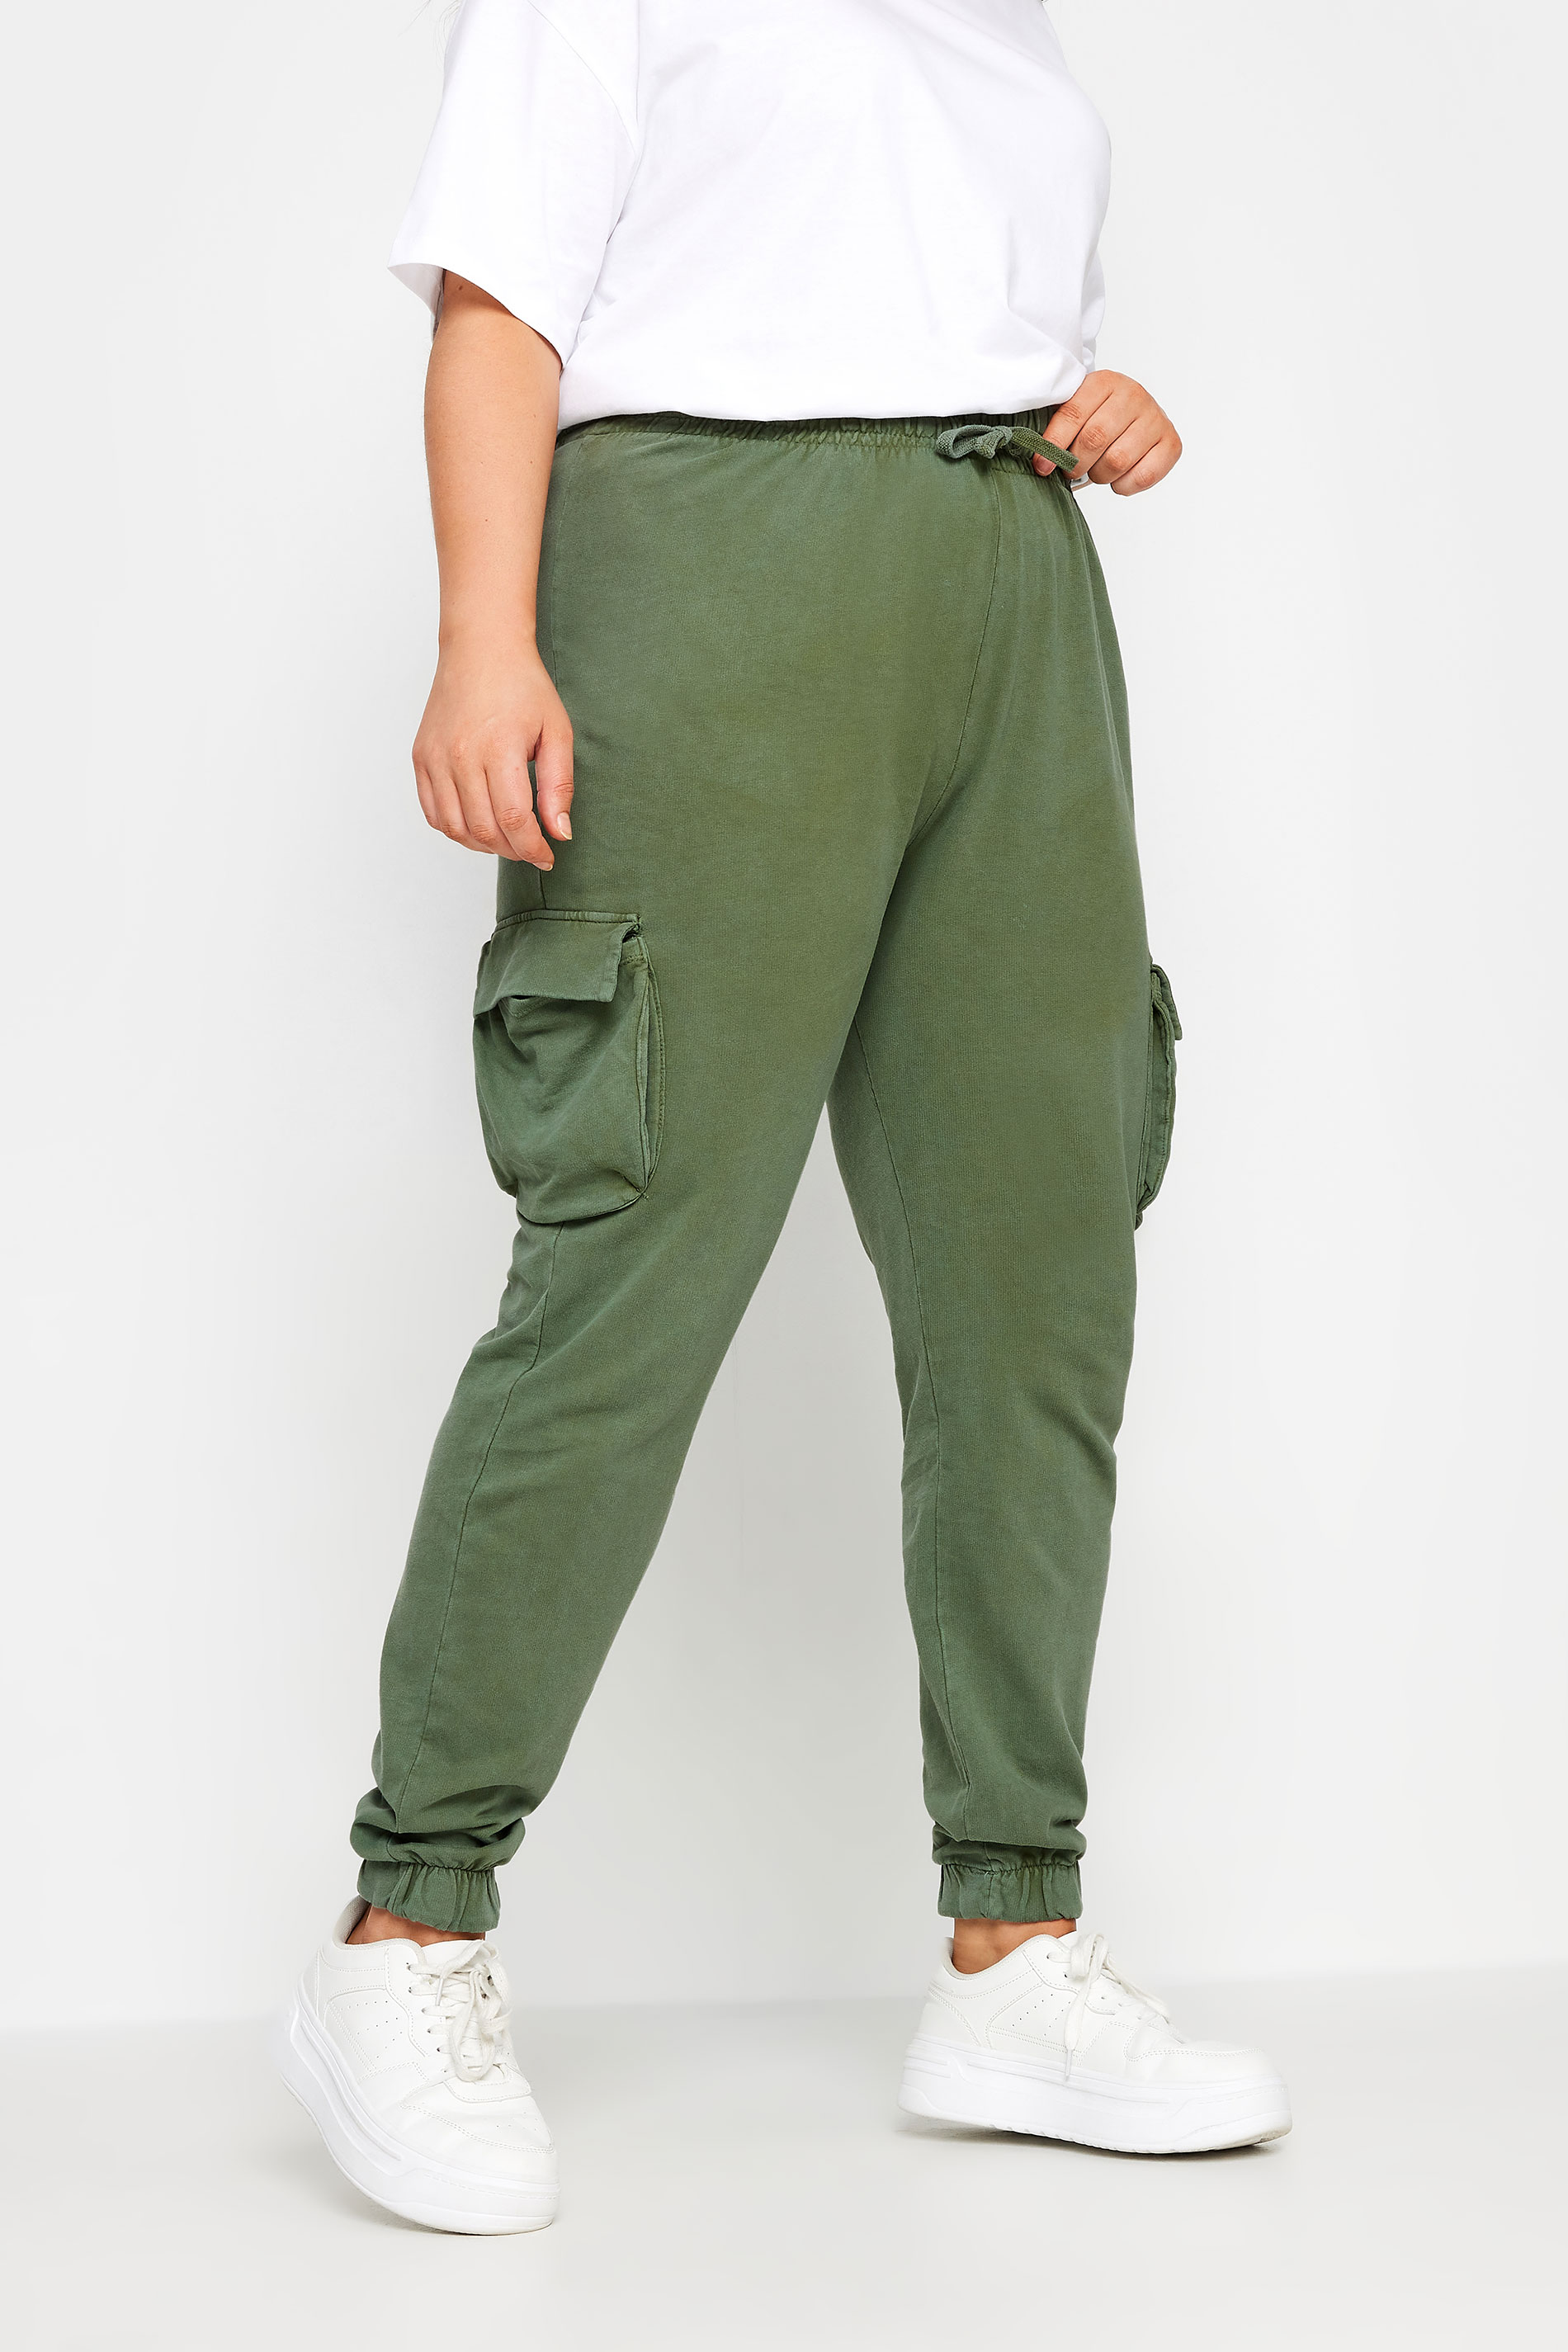 YOURS Plus Size Khaki Green Cargo Pocket Joggers | Yours Clothing 2